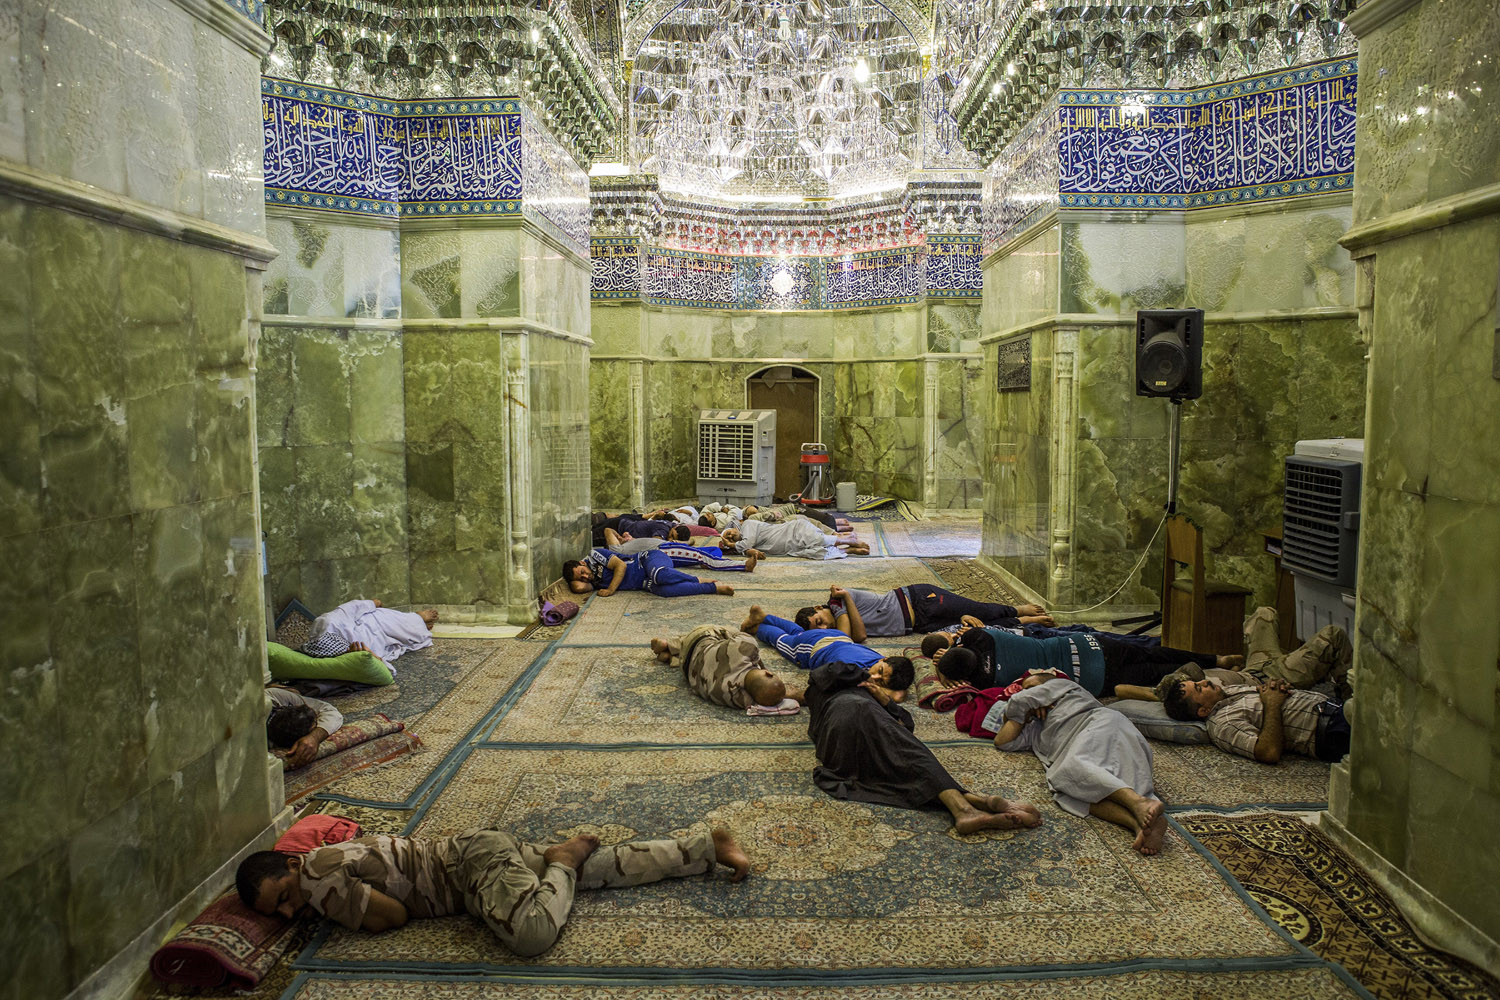 Shiite volunteers sleep during the mid-day heat inside the Askariya Shrine, where two imams revered by Shiites are buried, in Samarra, Iraq.